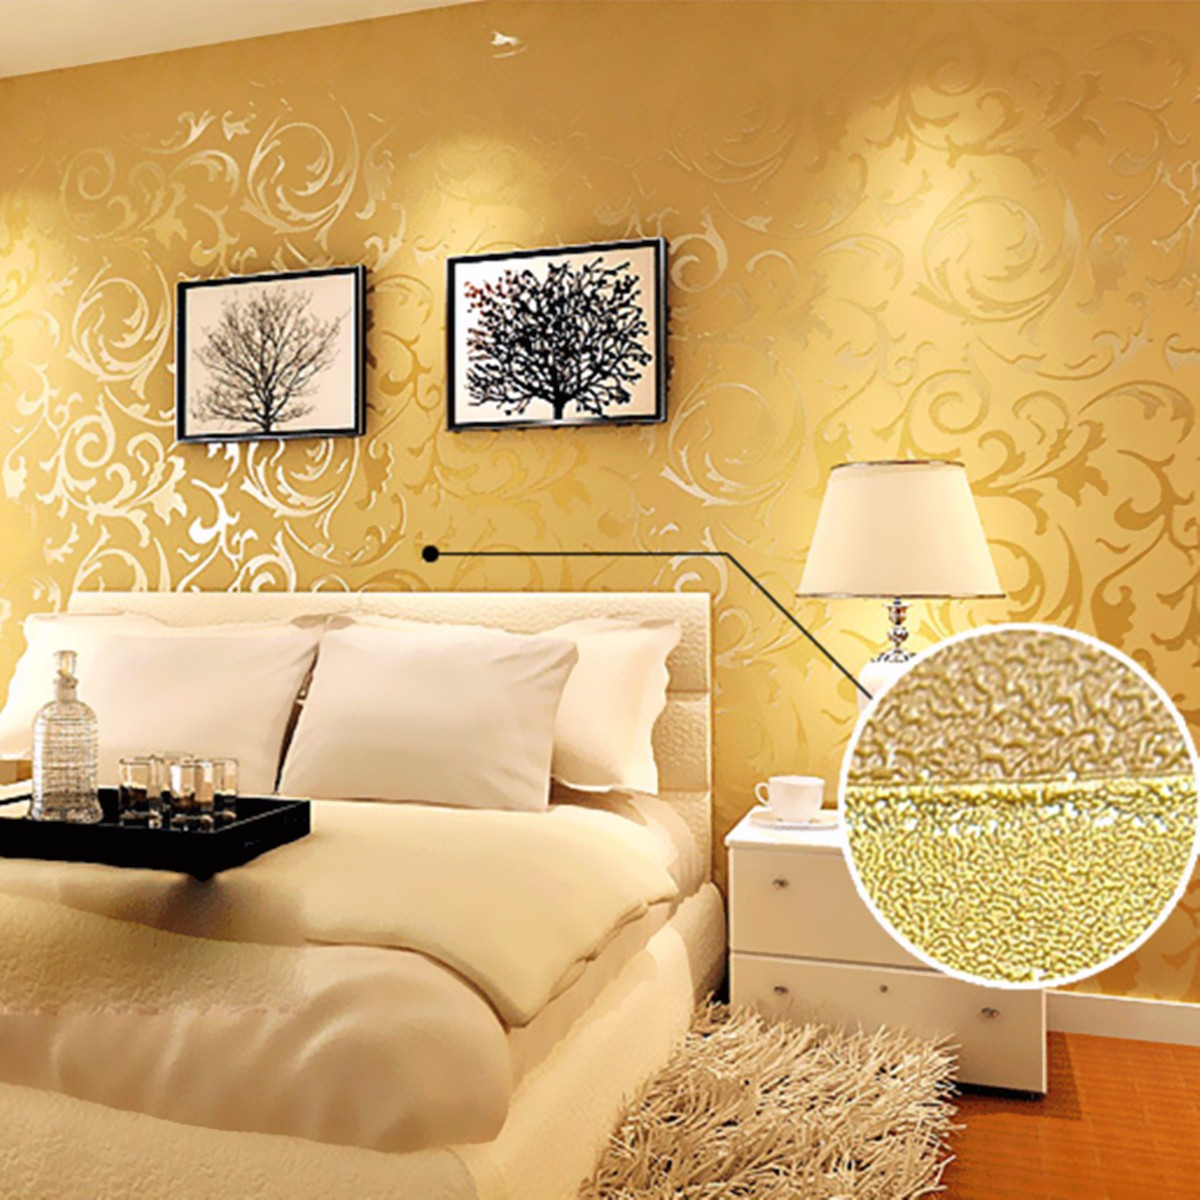 wallpaper sticker roll philippines,living room,room,wall,interior design,furniture